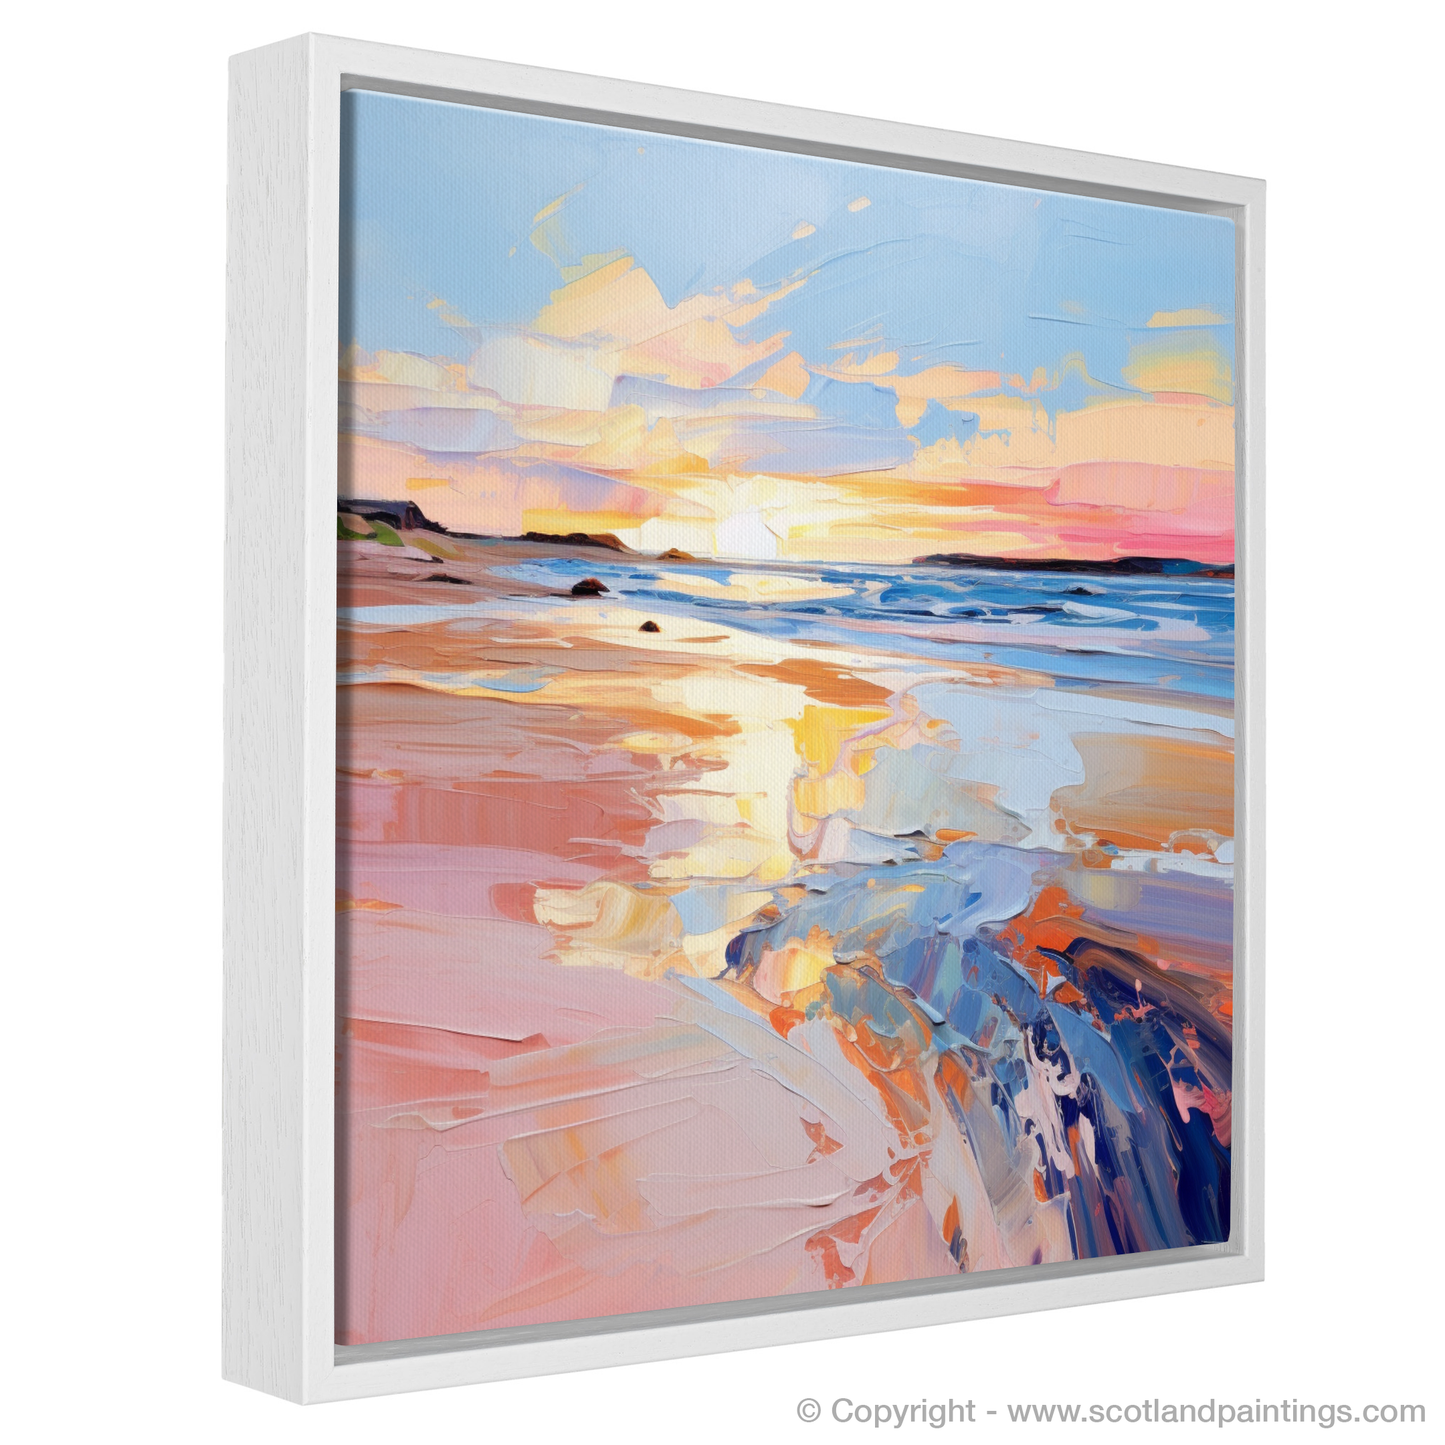 Painting and Art Print of Gullane Beach at sunset entitled "Gullane Beach Twilight Embrace".